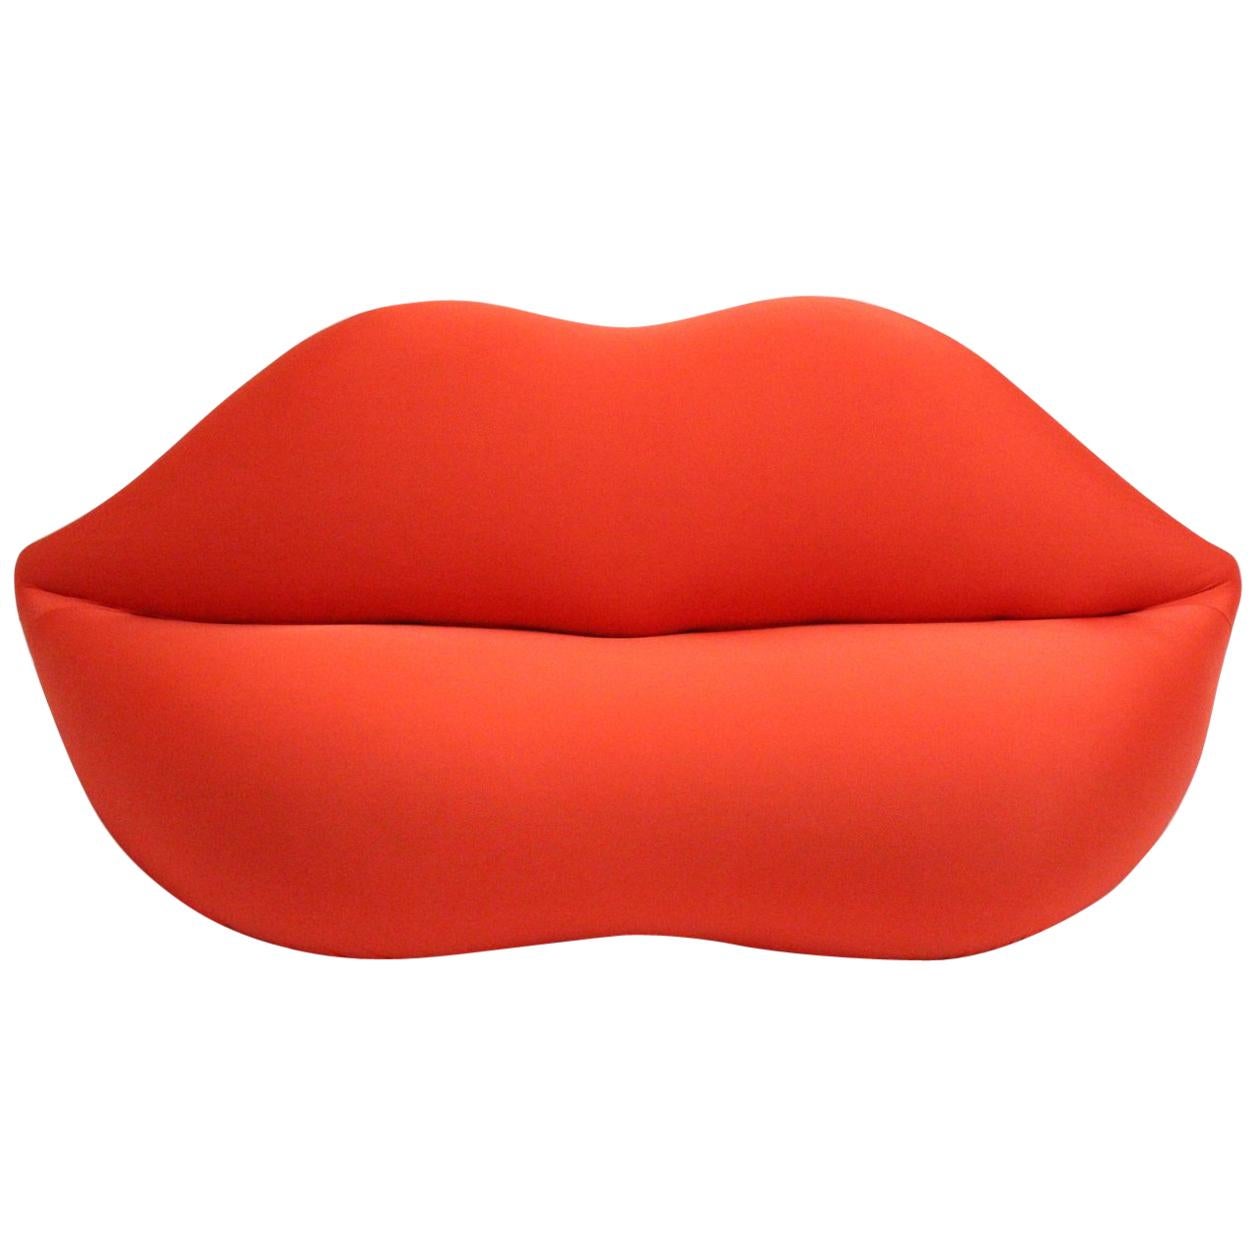 Who made the Lips sofa?